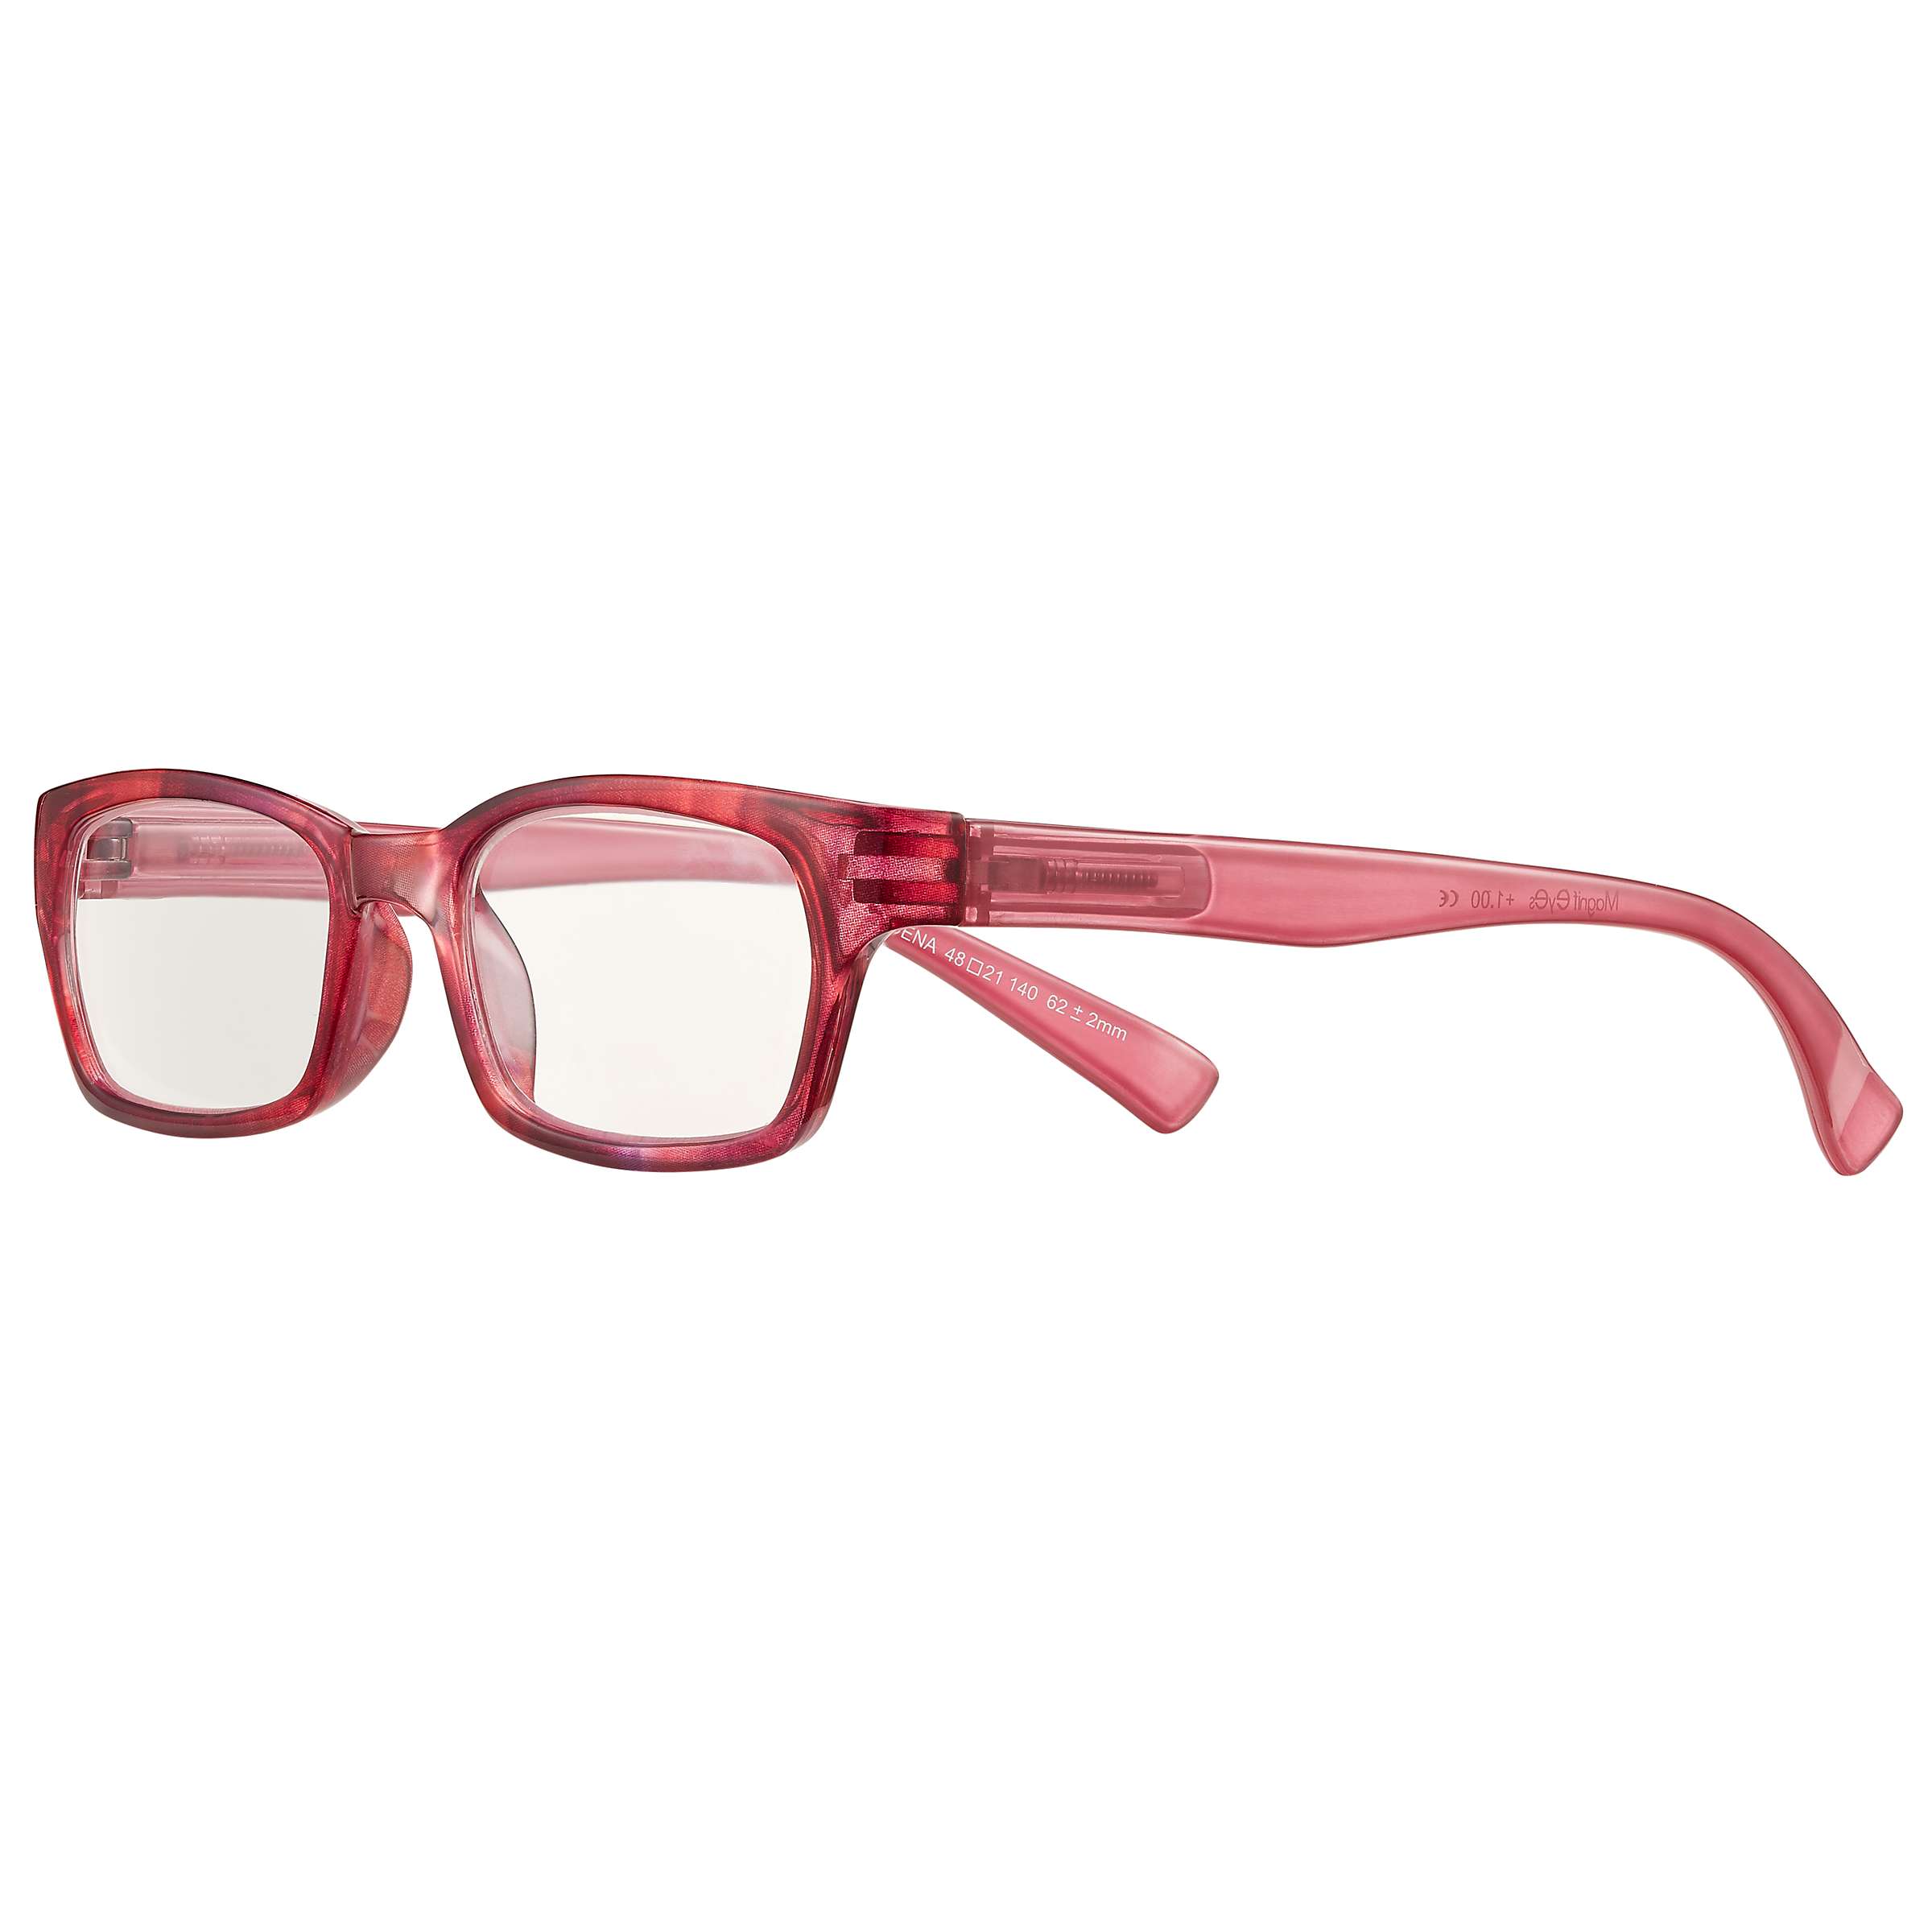 Buy Magnif Eyes Narrow Fit Ready Readers Pasadena Glasses, Raspberry Online at johnlewis.com